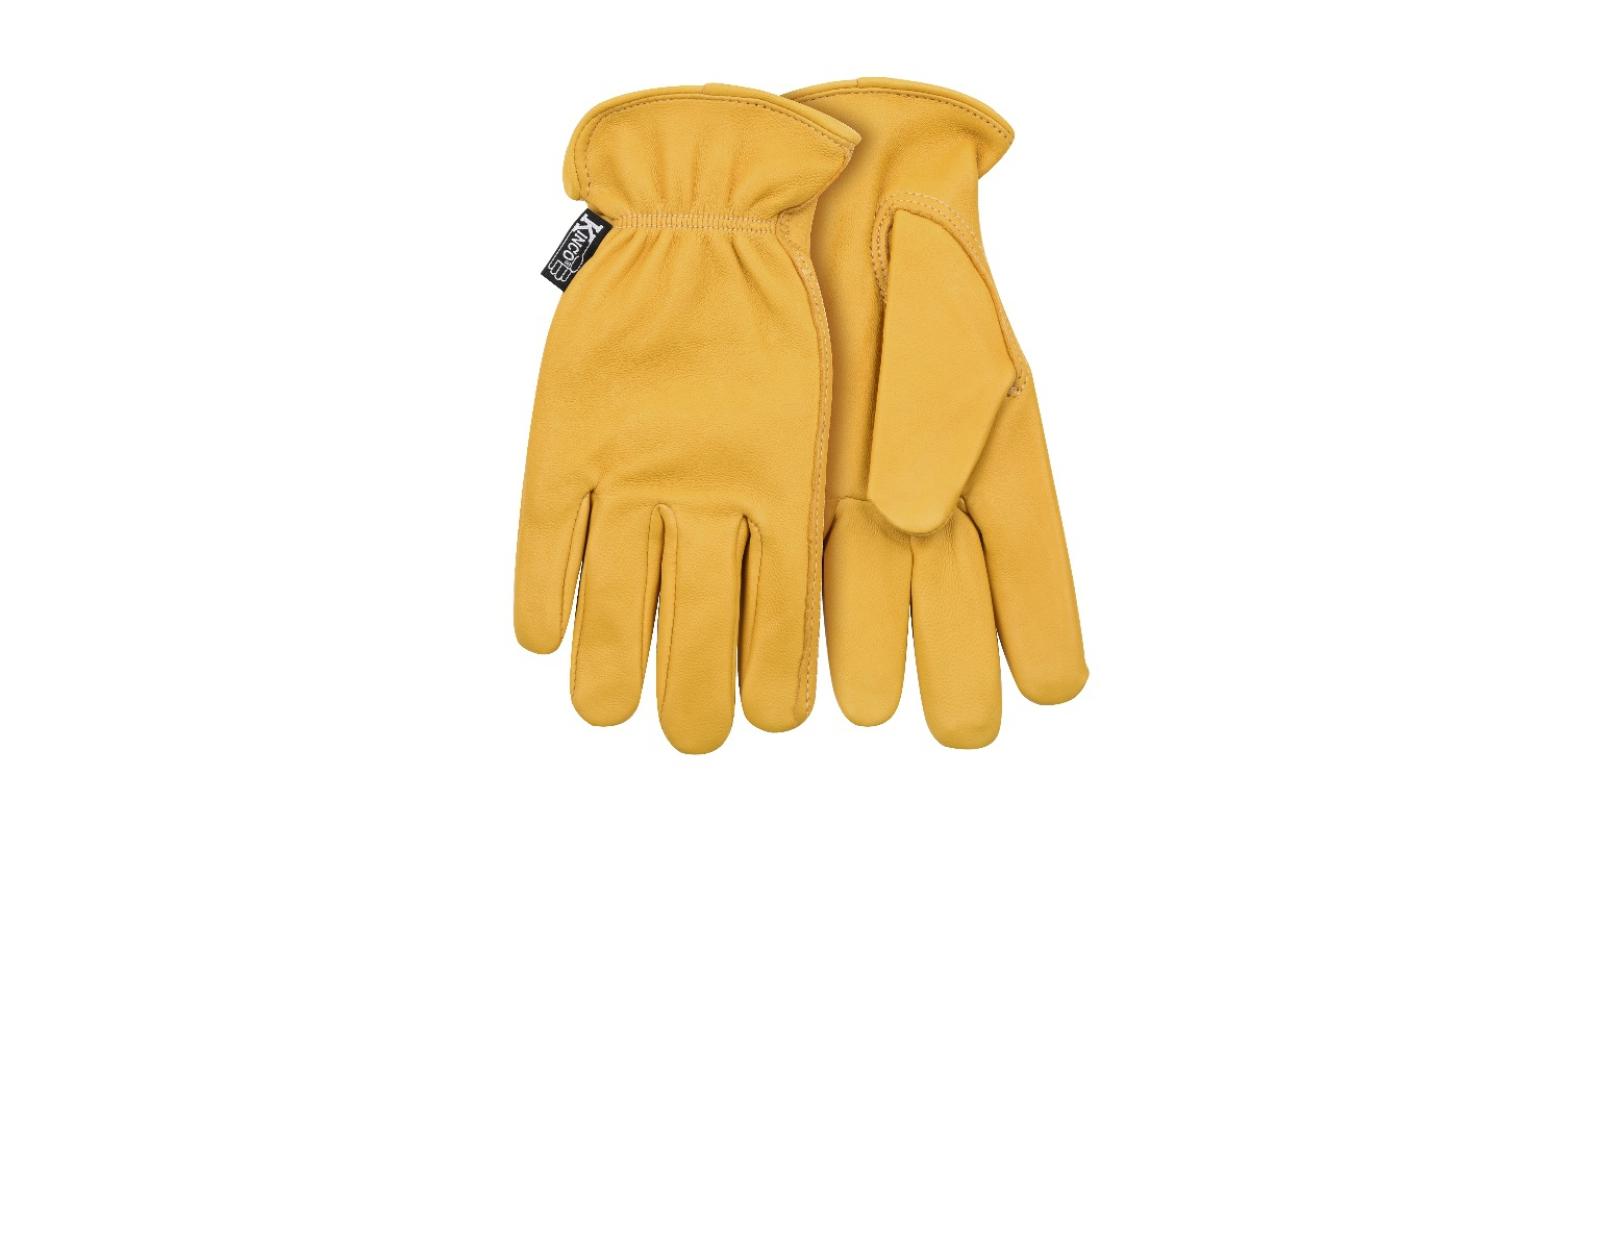 Kinco Women's Premium Grain Deerskin Driver Gloves